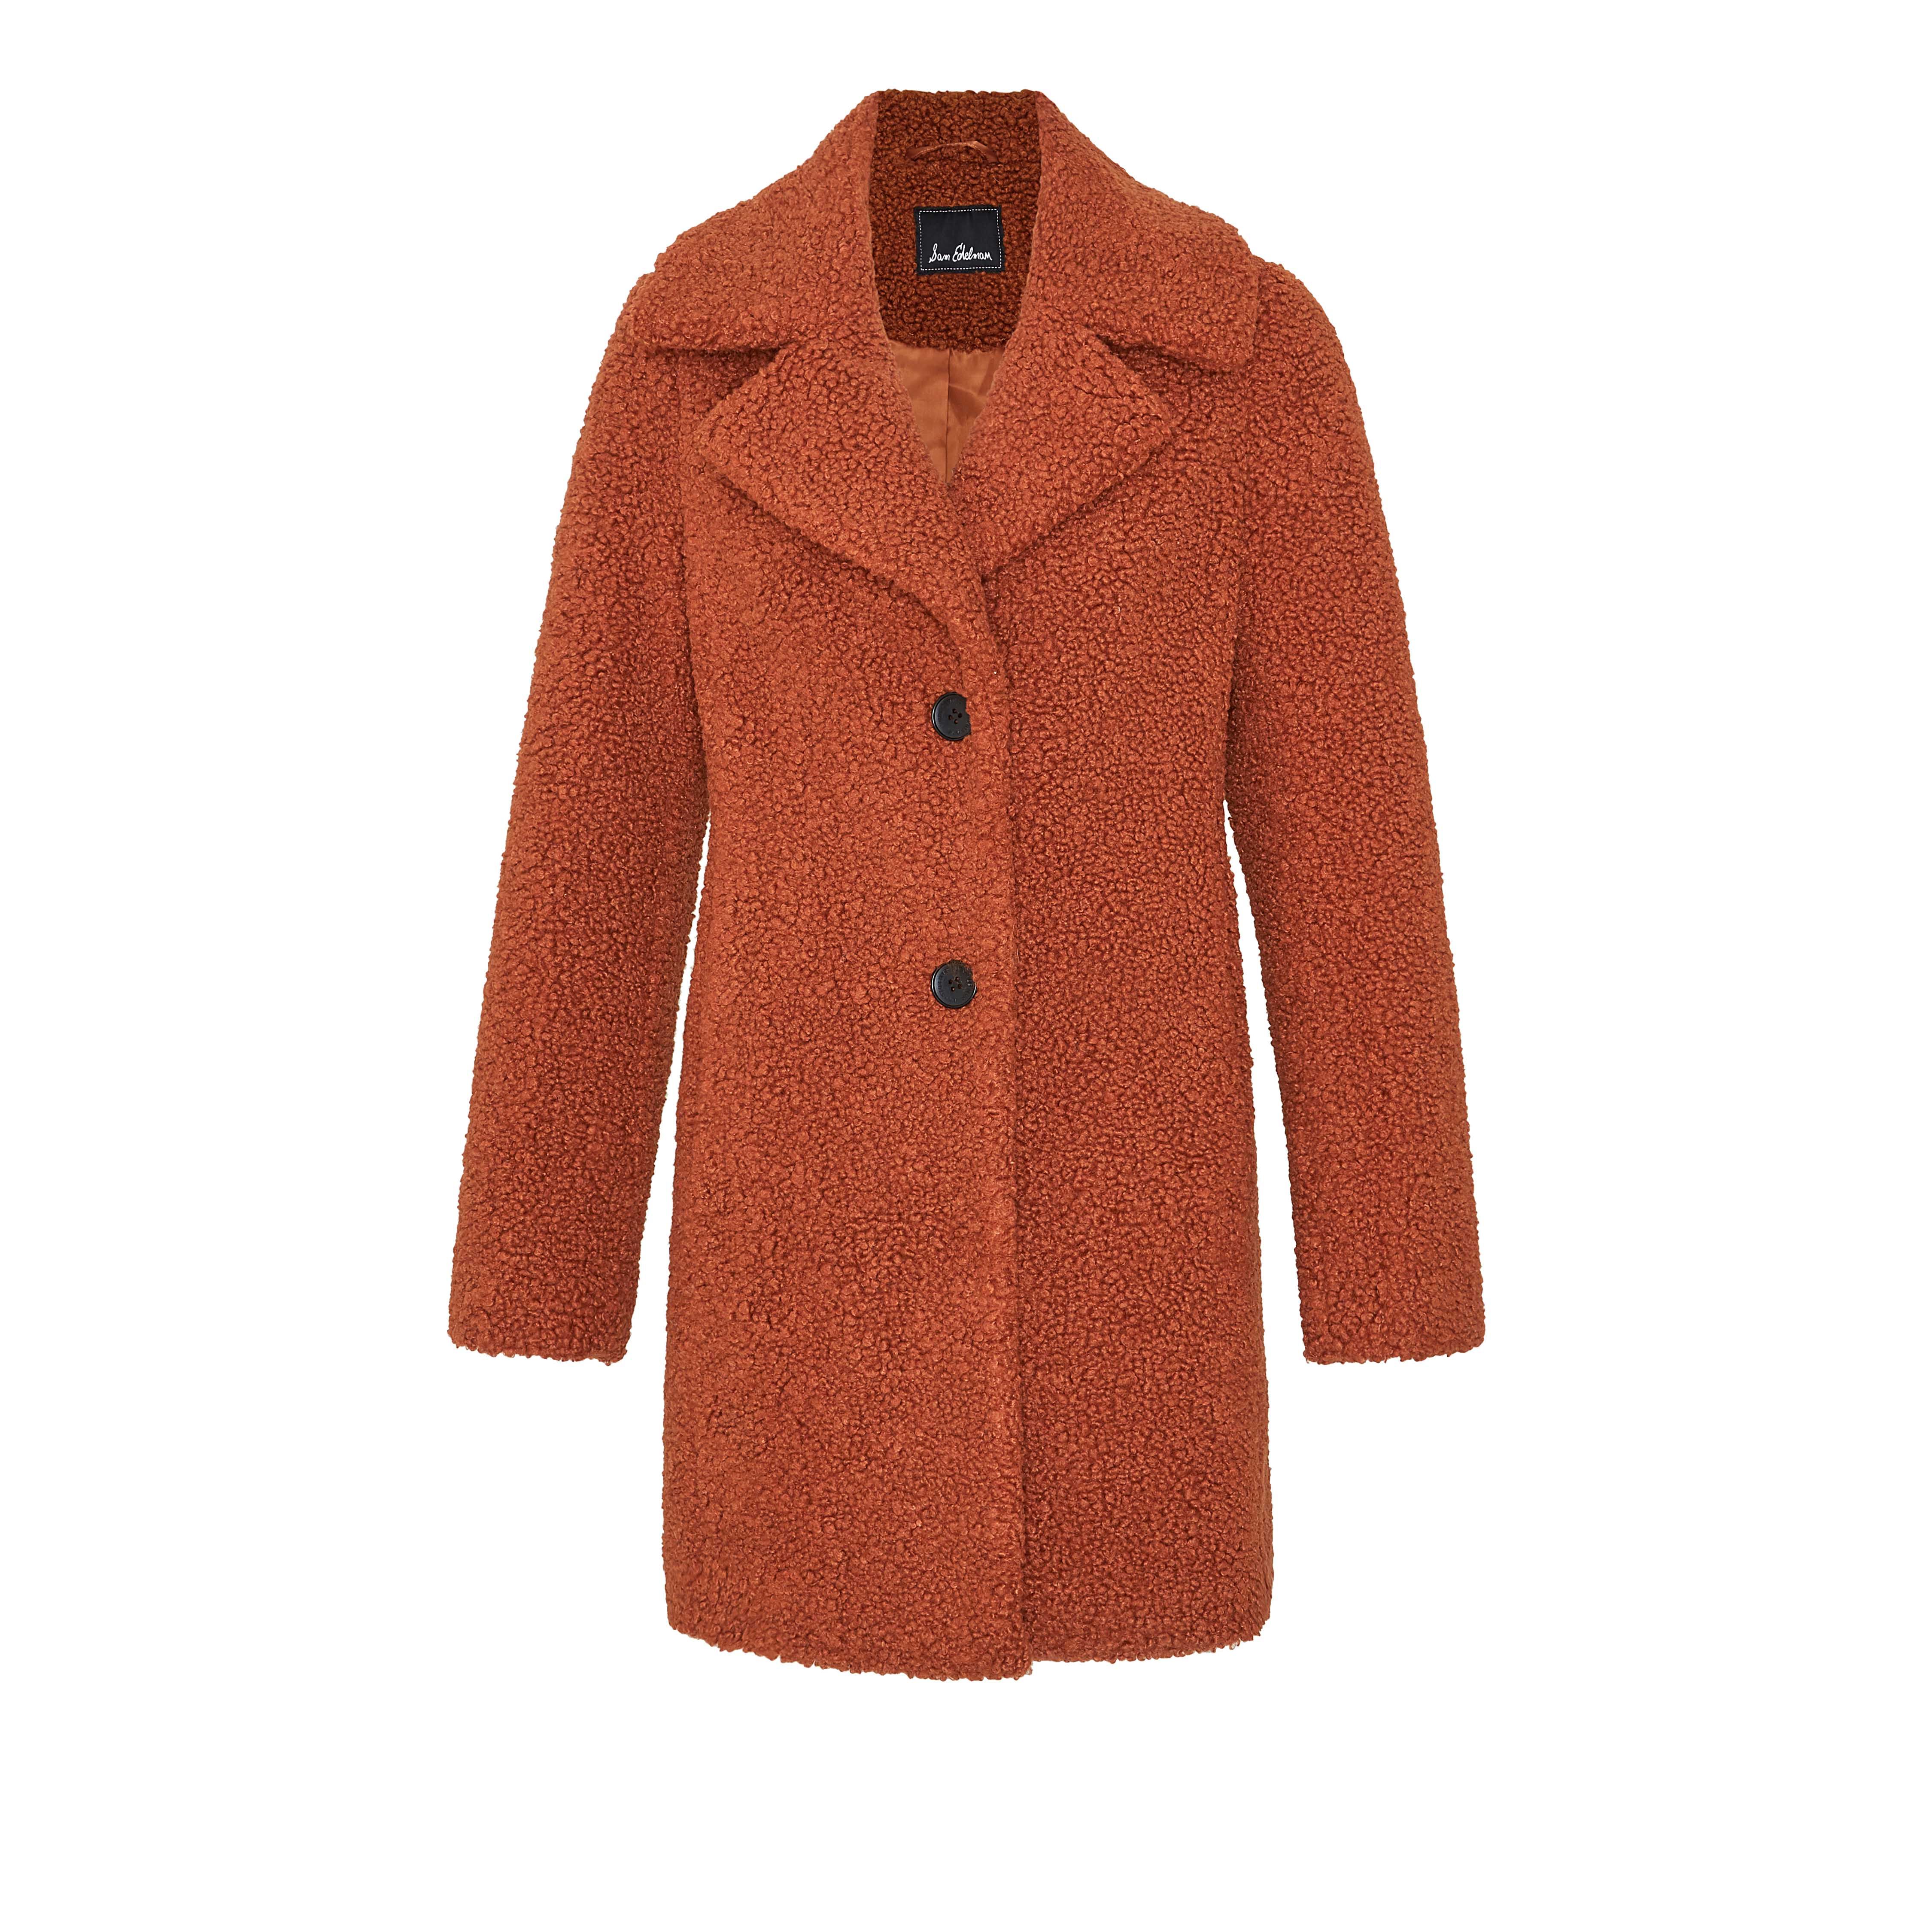 Clothing, Coat, Outerwear, Trench coat, Overcoat, Orange, Sleeve, Collar, Button, Jacket, 